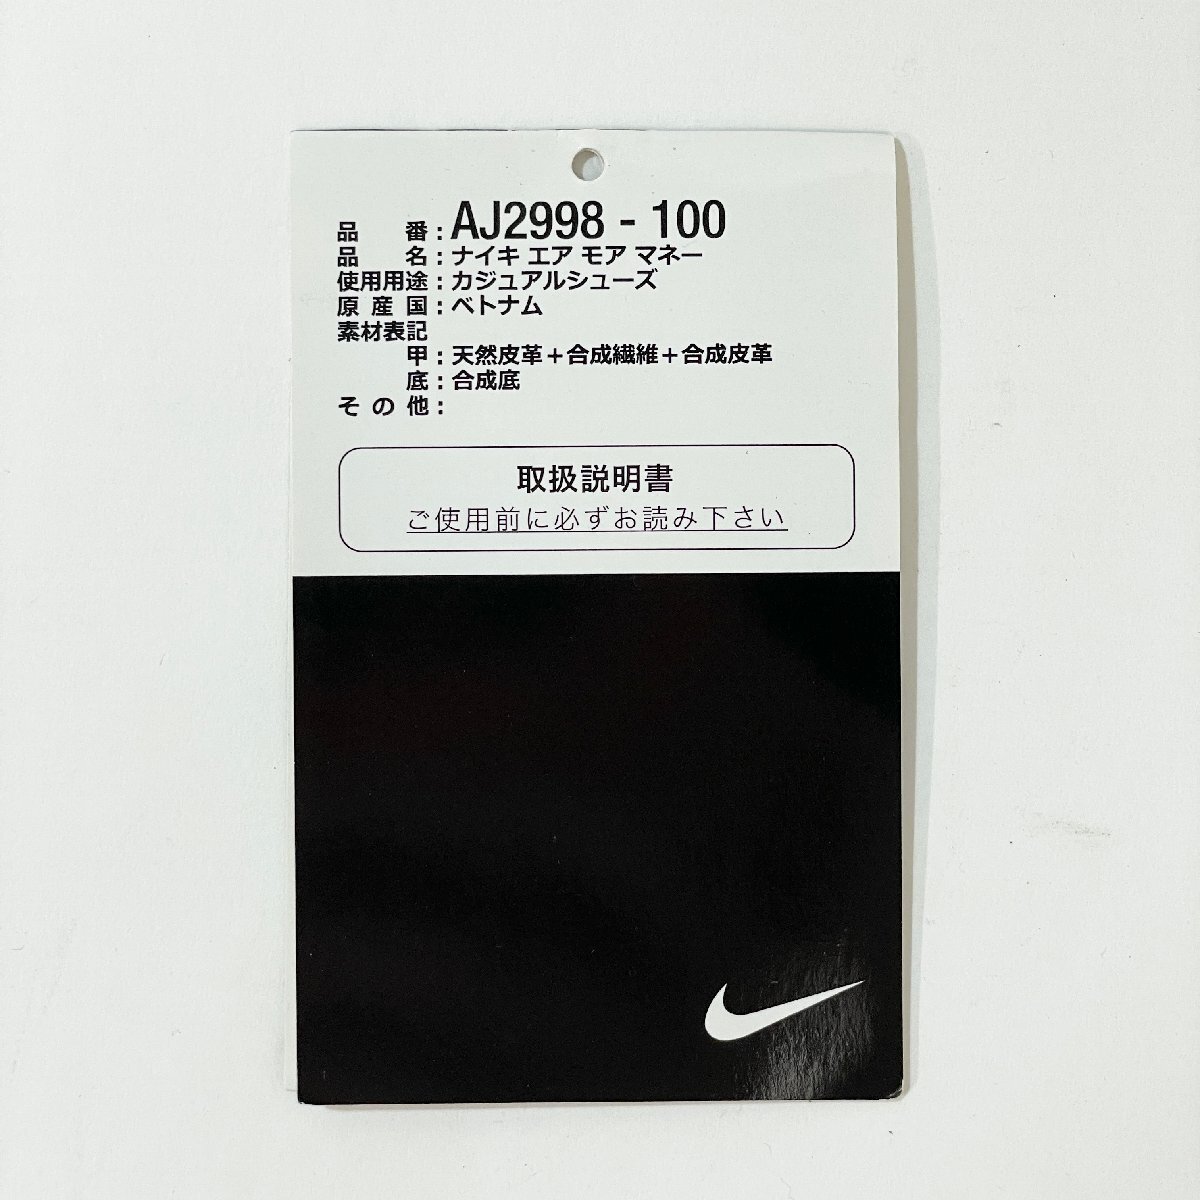 30cm NIKE AIR MORE MONEY AJ2998-100 Nike воздушный mo льняное семя - белый красный мужской спортивные туфли WH H106789